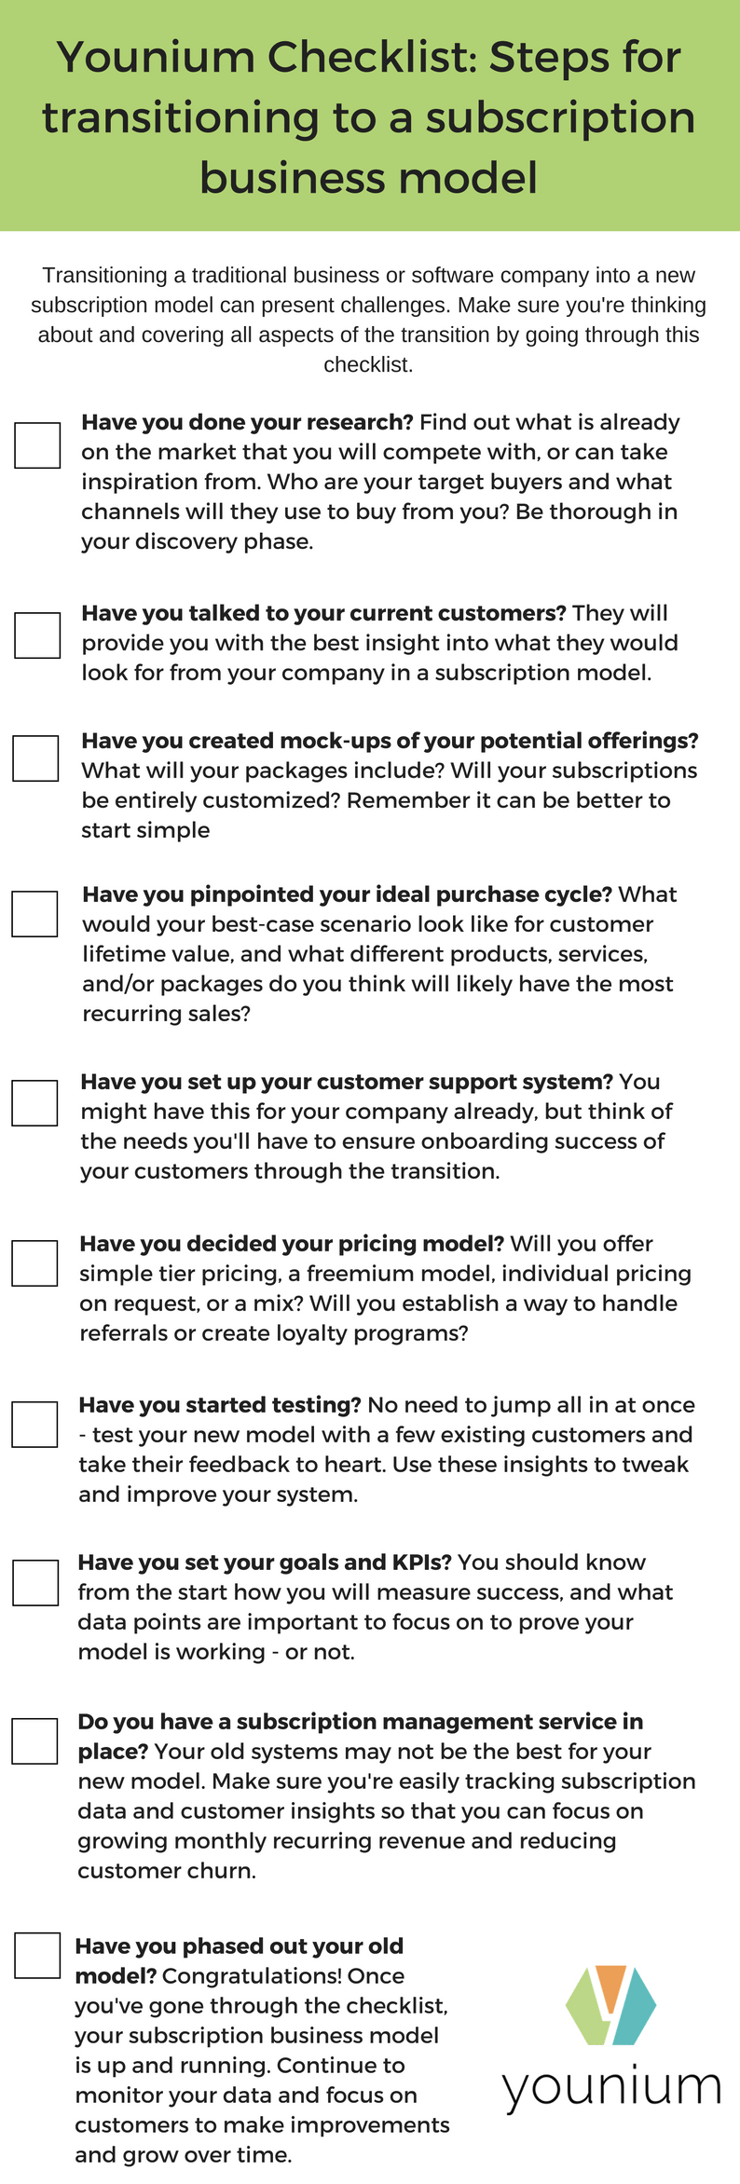 Younium Subscription Model Checklist.png